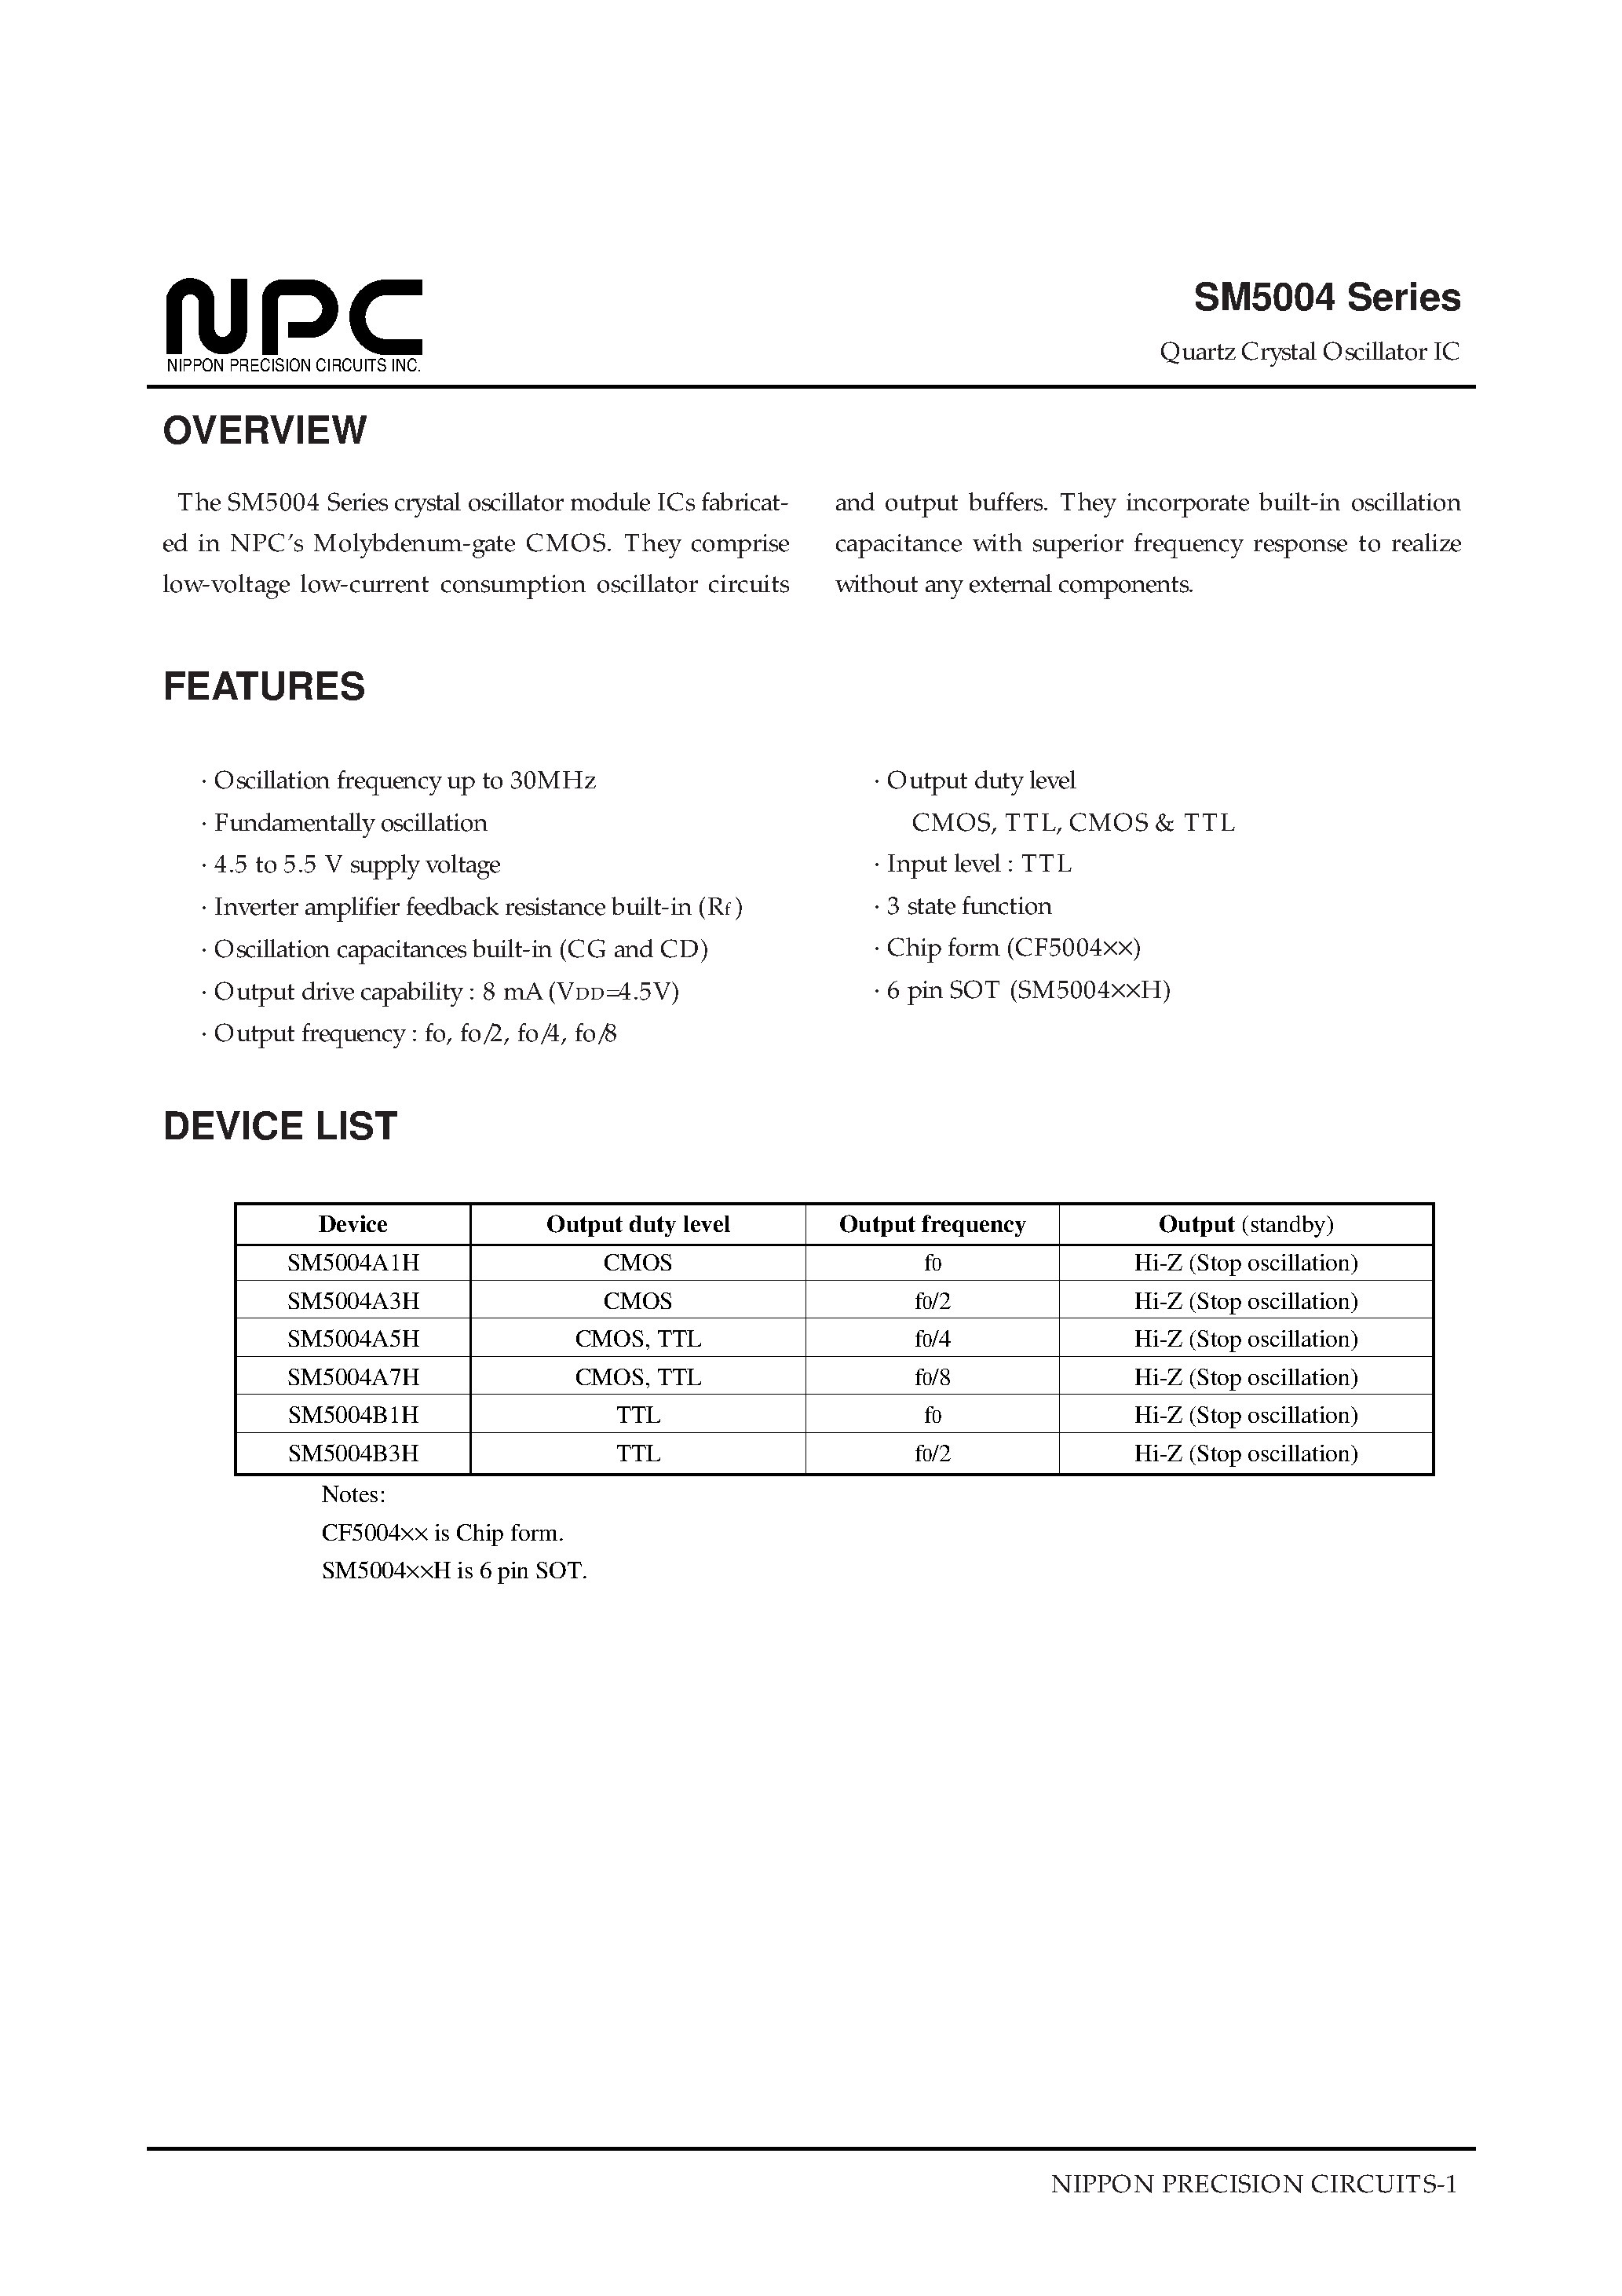 Datasheet SM5004A3H - Quartz Crystal Oscillator IC page 1